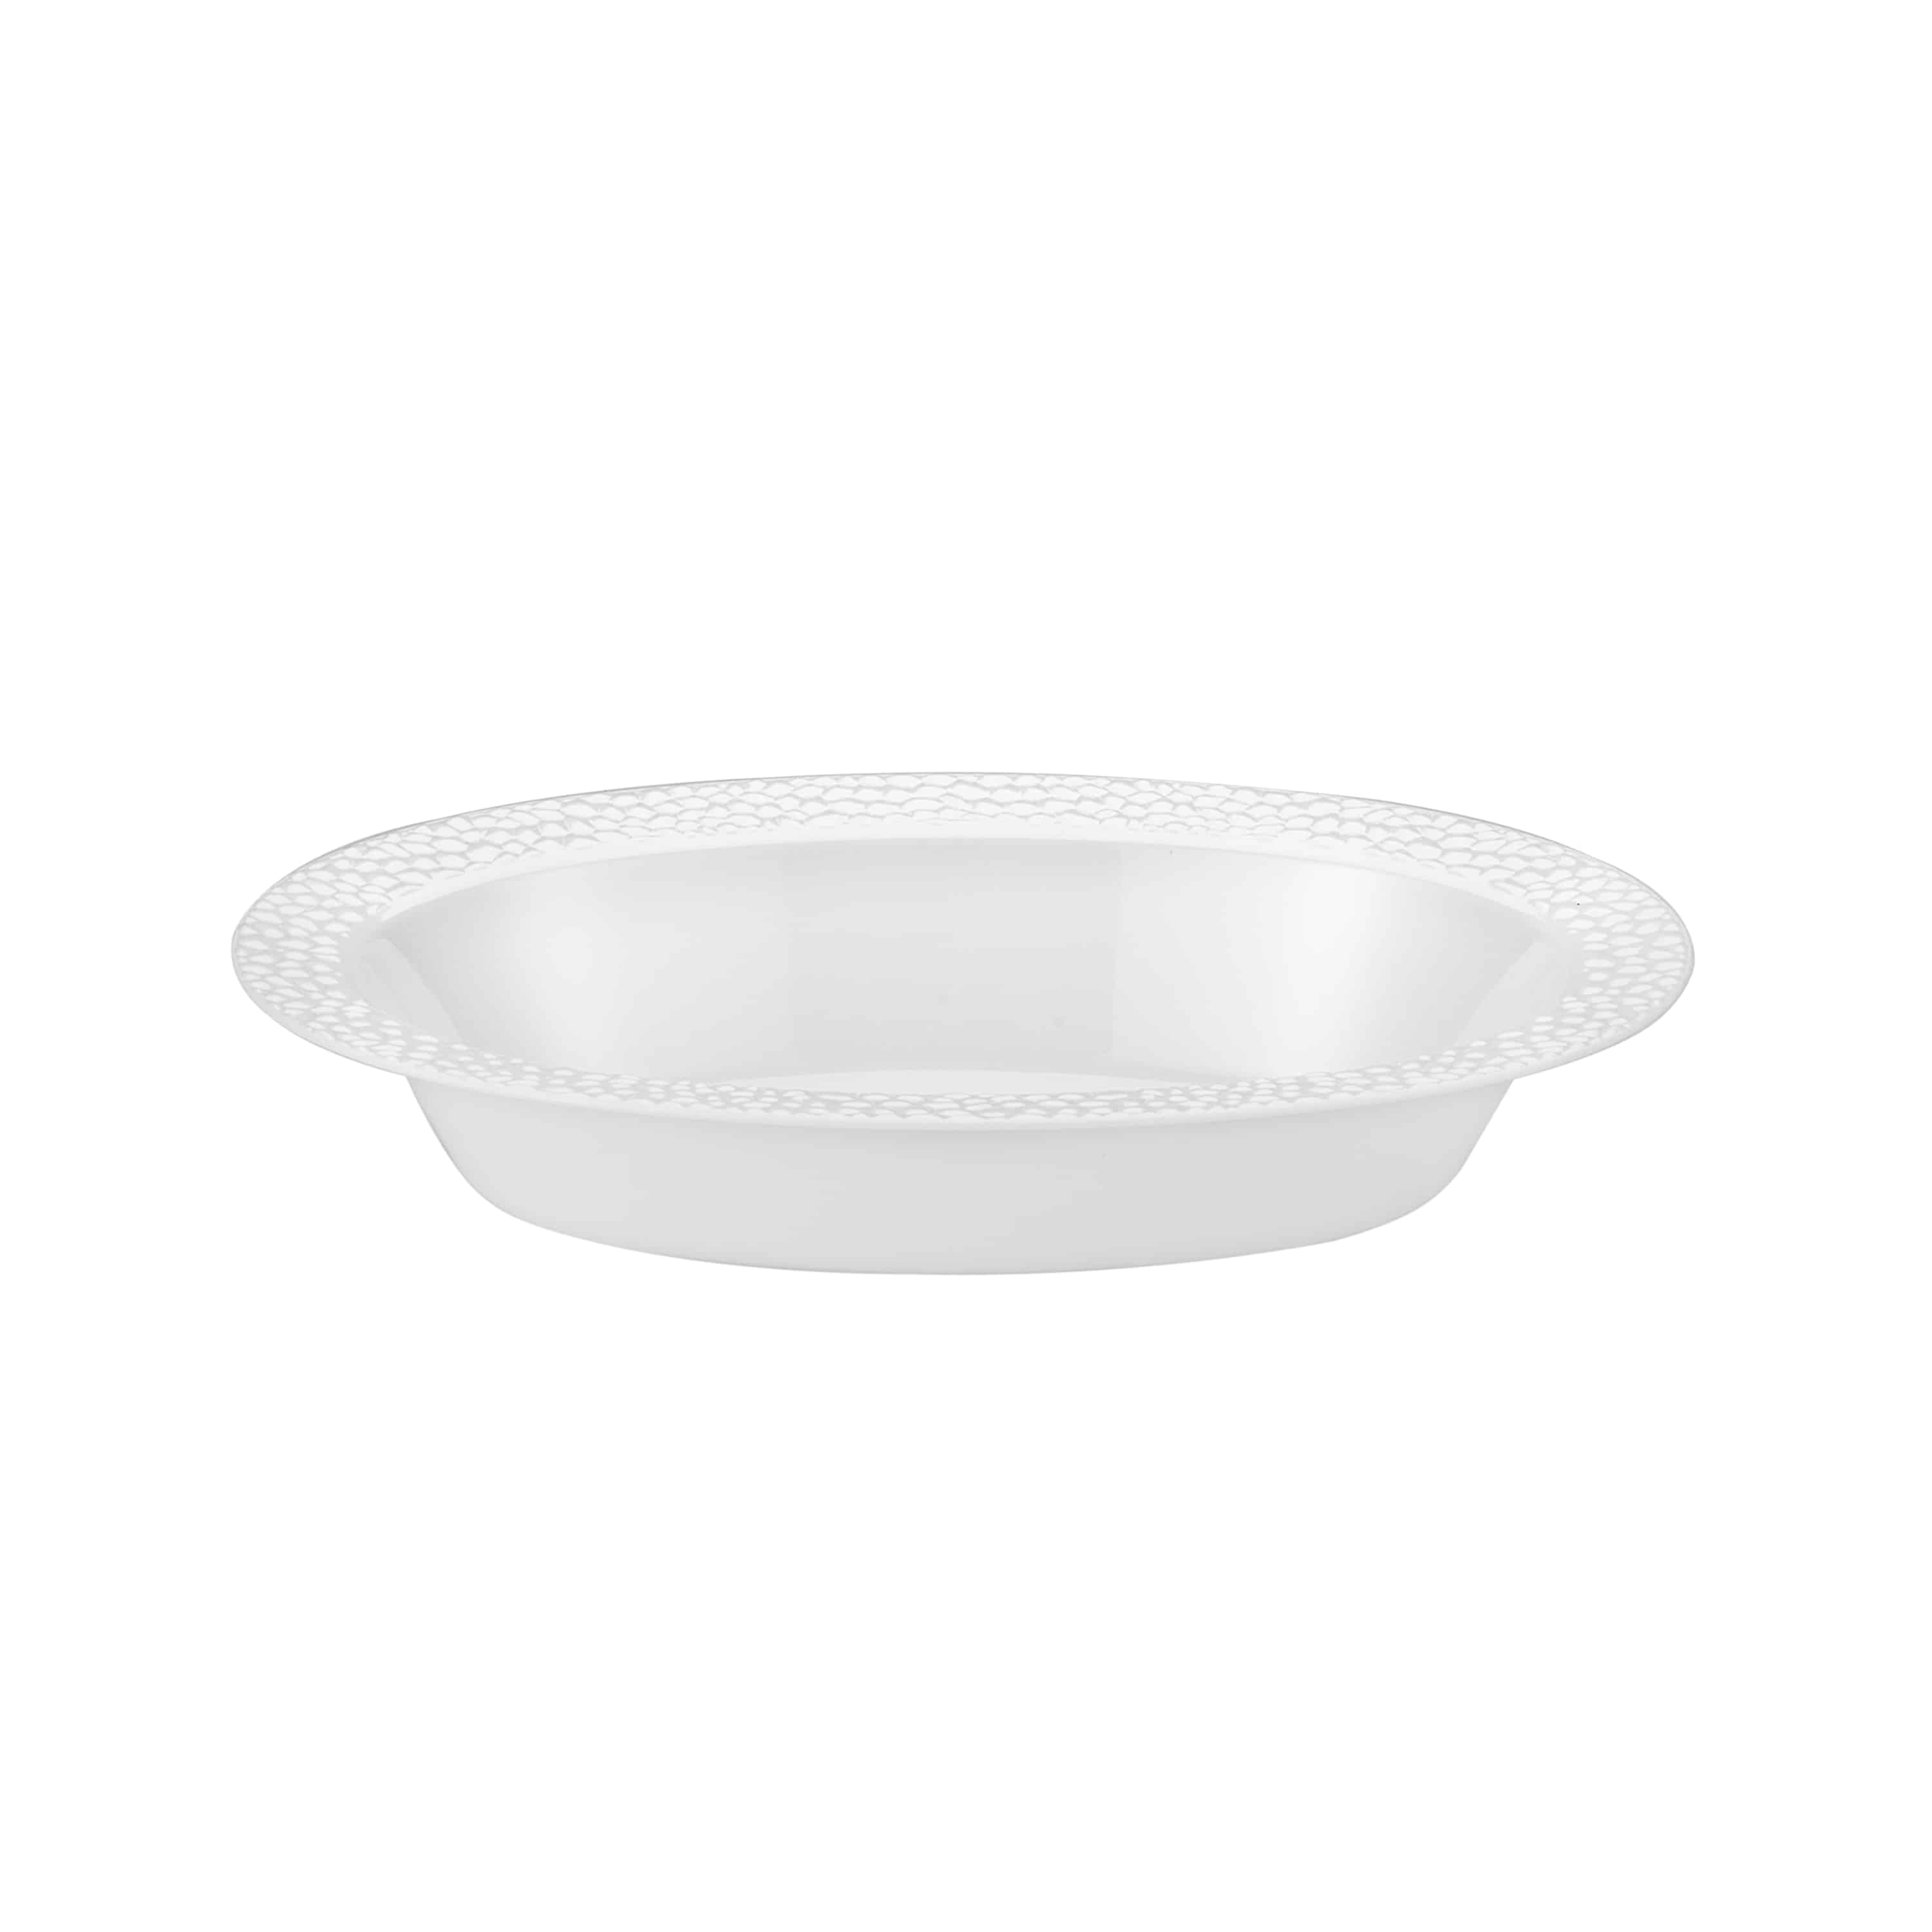 Pebbled Premium Plastic Oval Serving Bowls